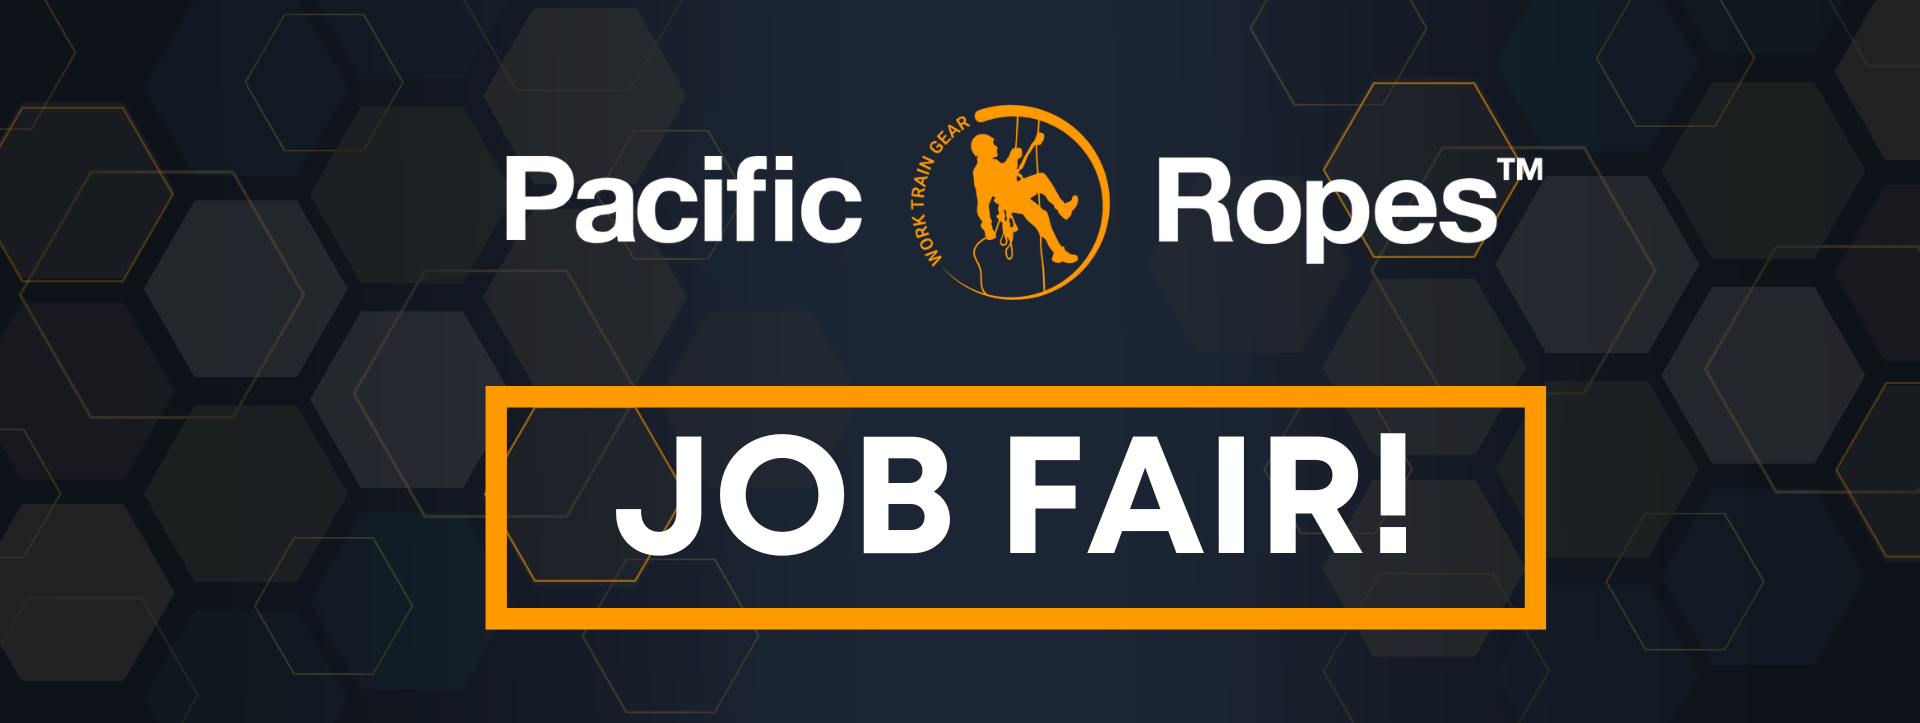 Job Fair for Rope Technicians